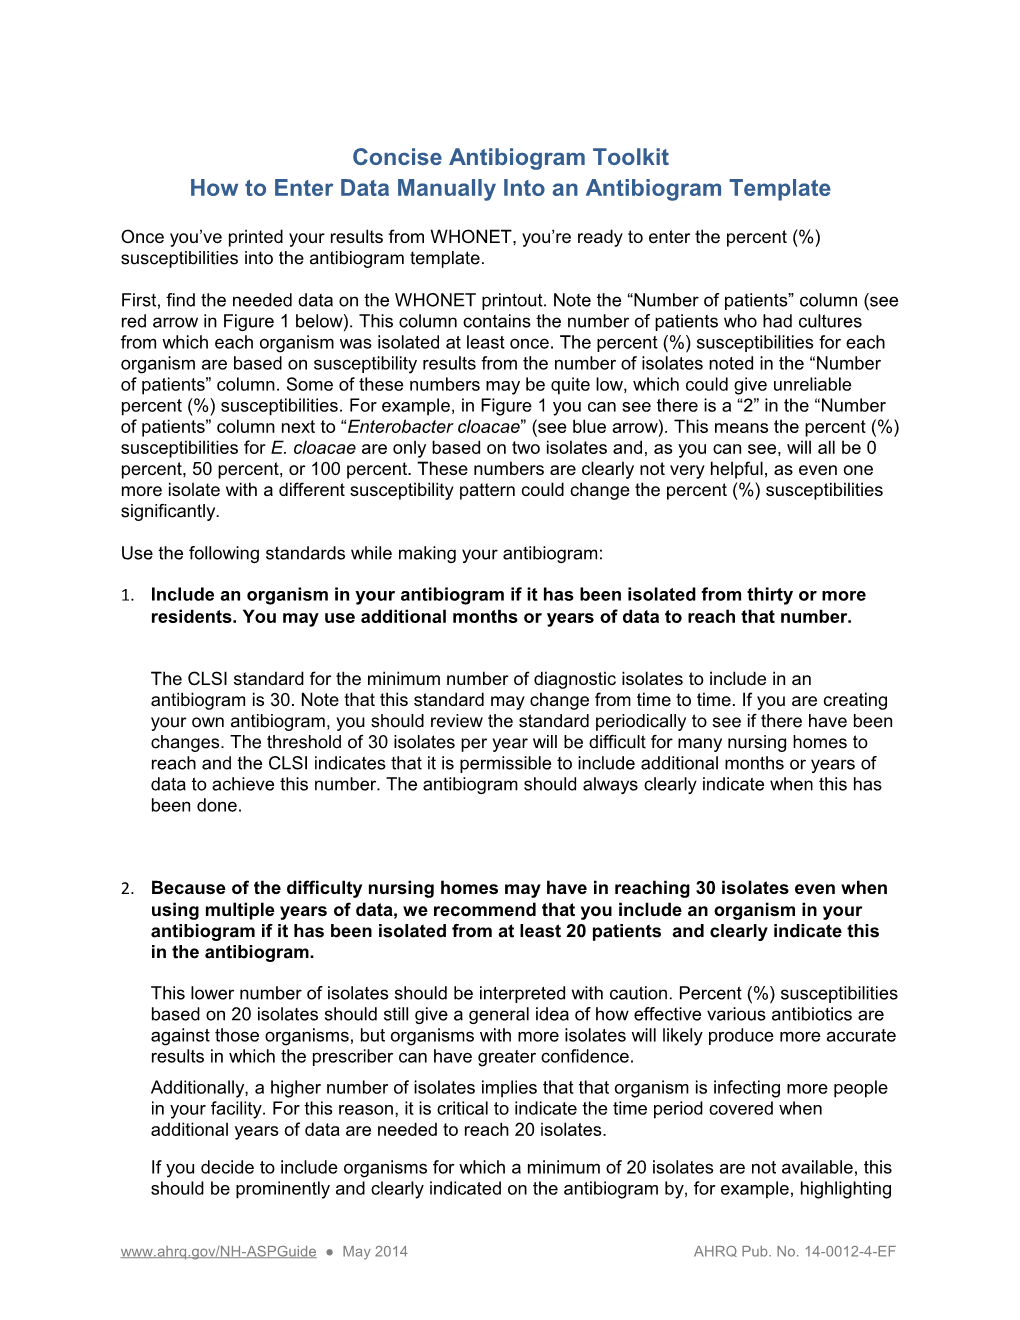 How to Enter Data Manually Into an Antibiogram Template1